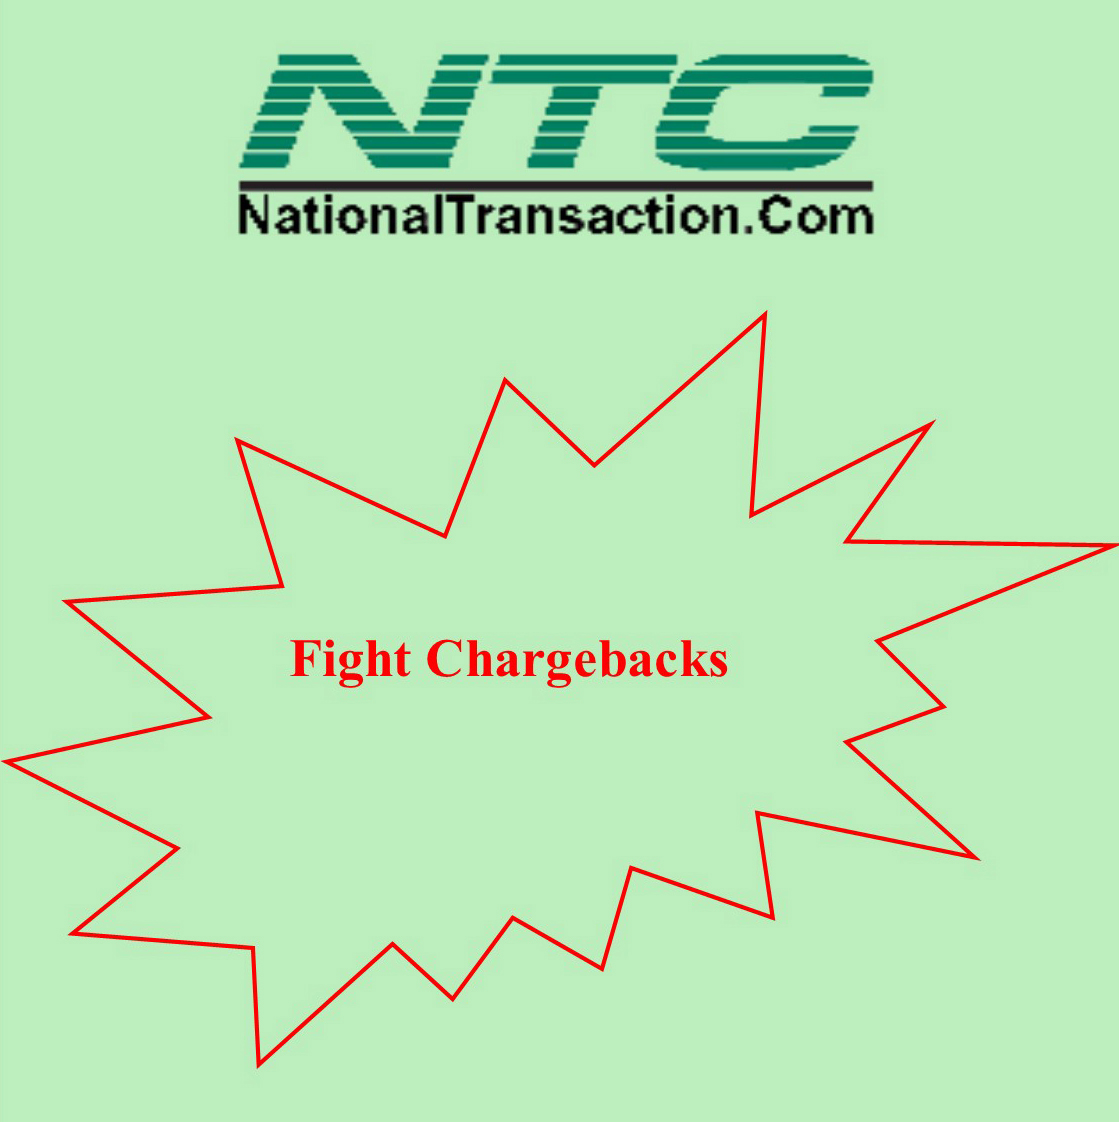 Fighting Chargeback